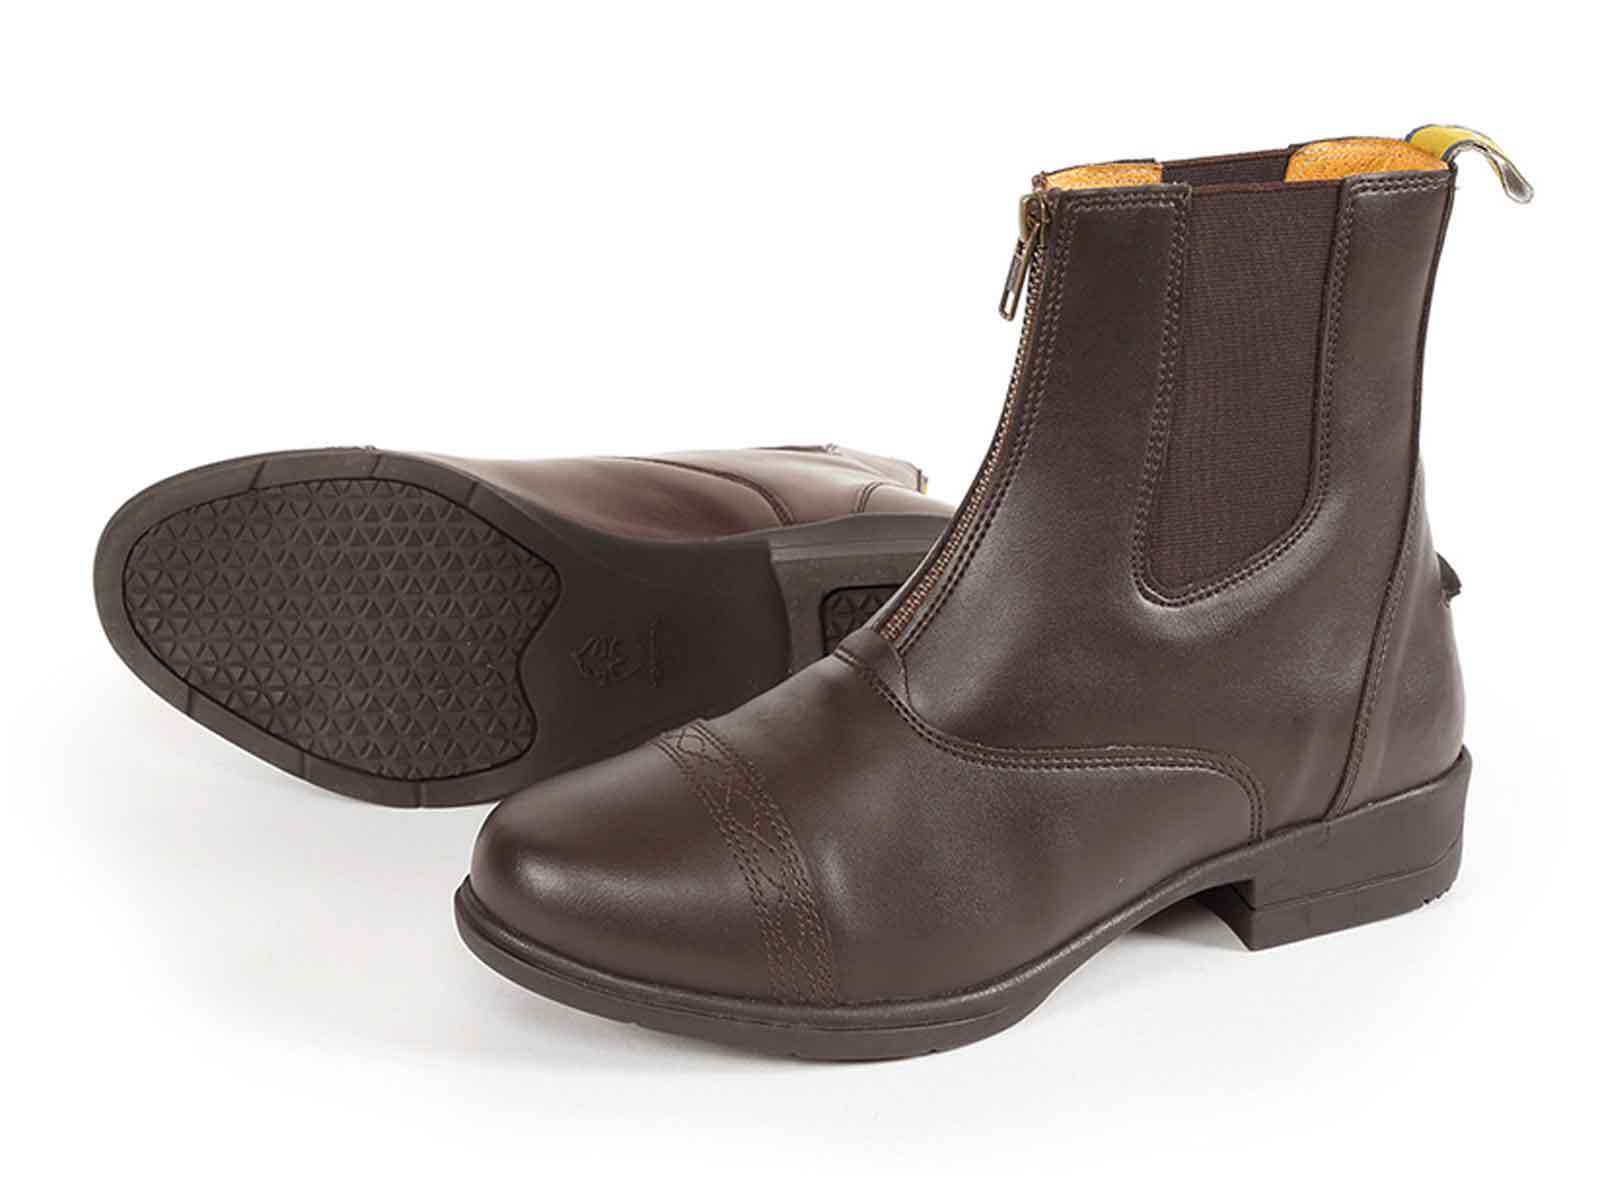 Rhinegold Childrens Classic Leather Jodhpur Boots FREE P&P sizes J10-5 